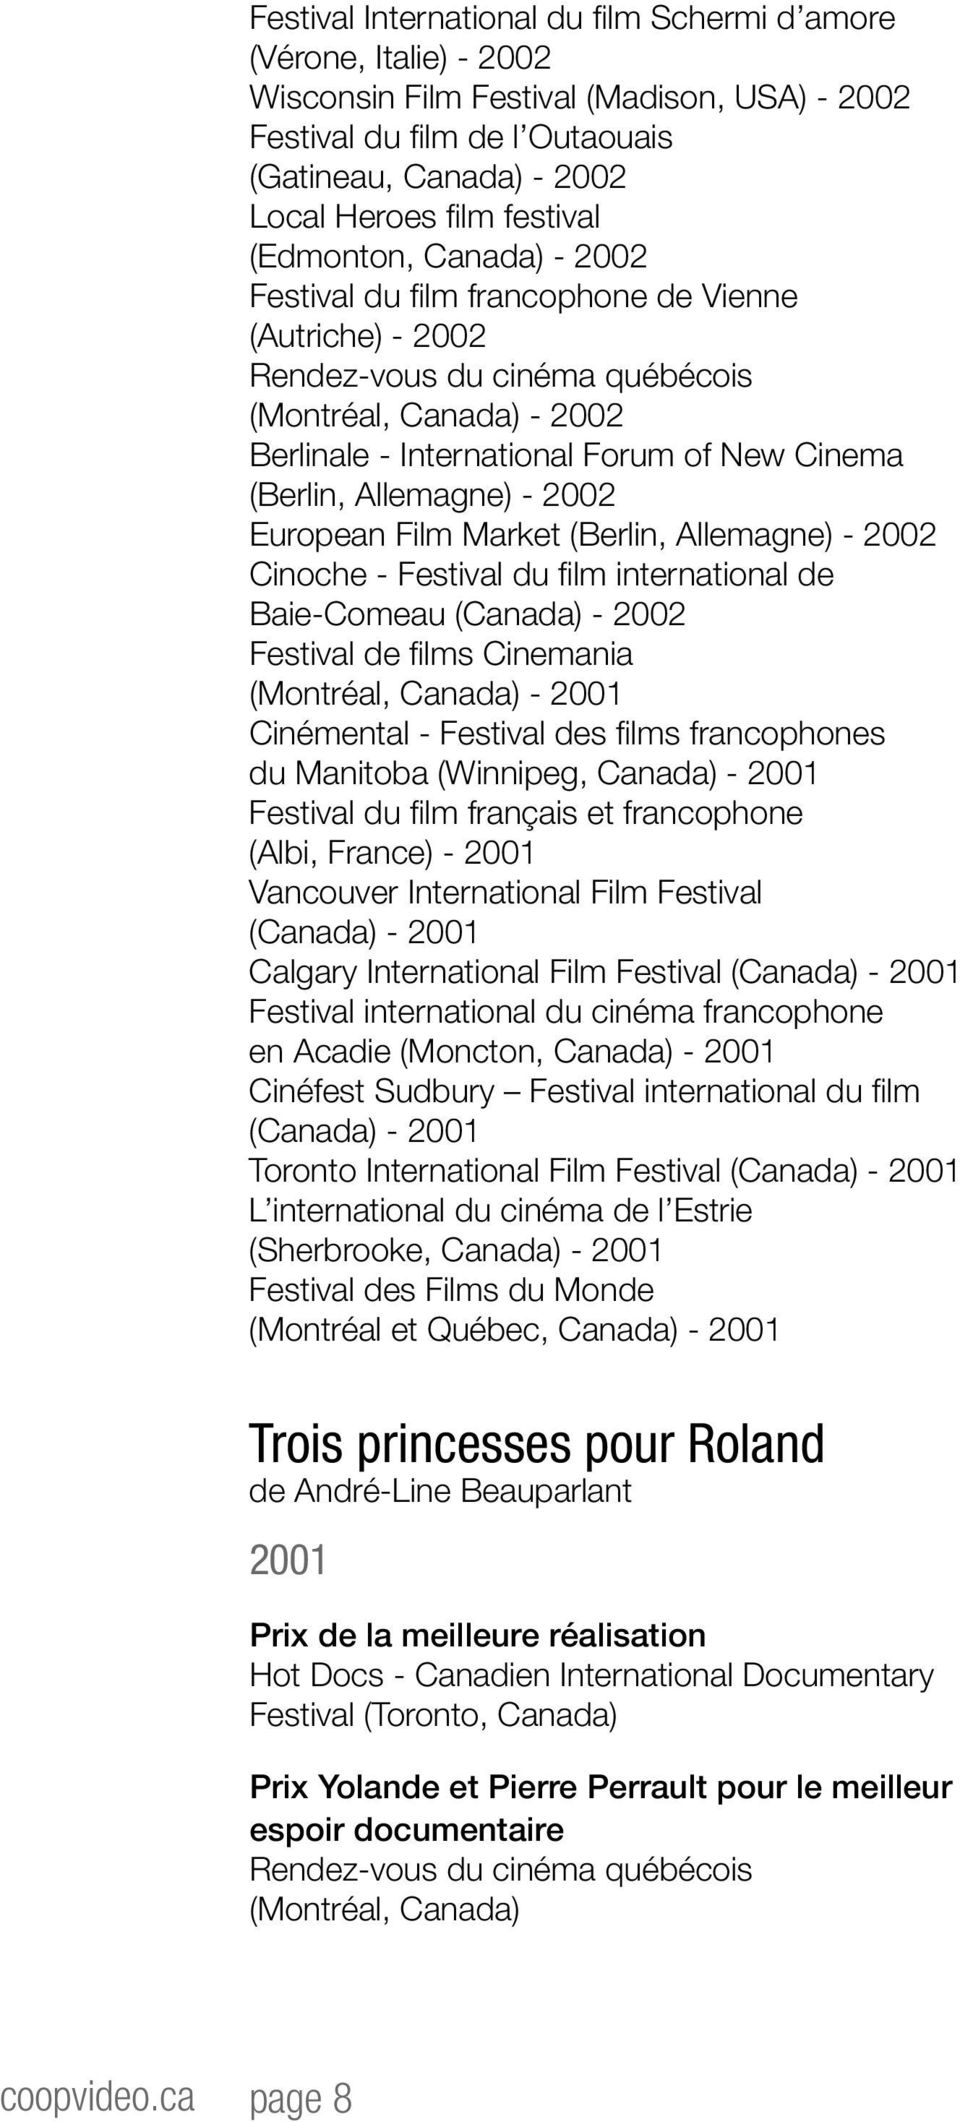 (Berlin, Allemagne) - 2002 Cinoche - Festival du fi lm international de Baie-Comeau (Canada) - 2002 Festival de fi lms Cinemania - 2001 Cinémental - Festival des fi lms francophones du Manitoba